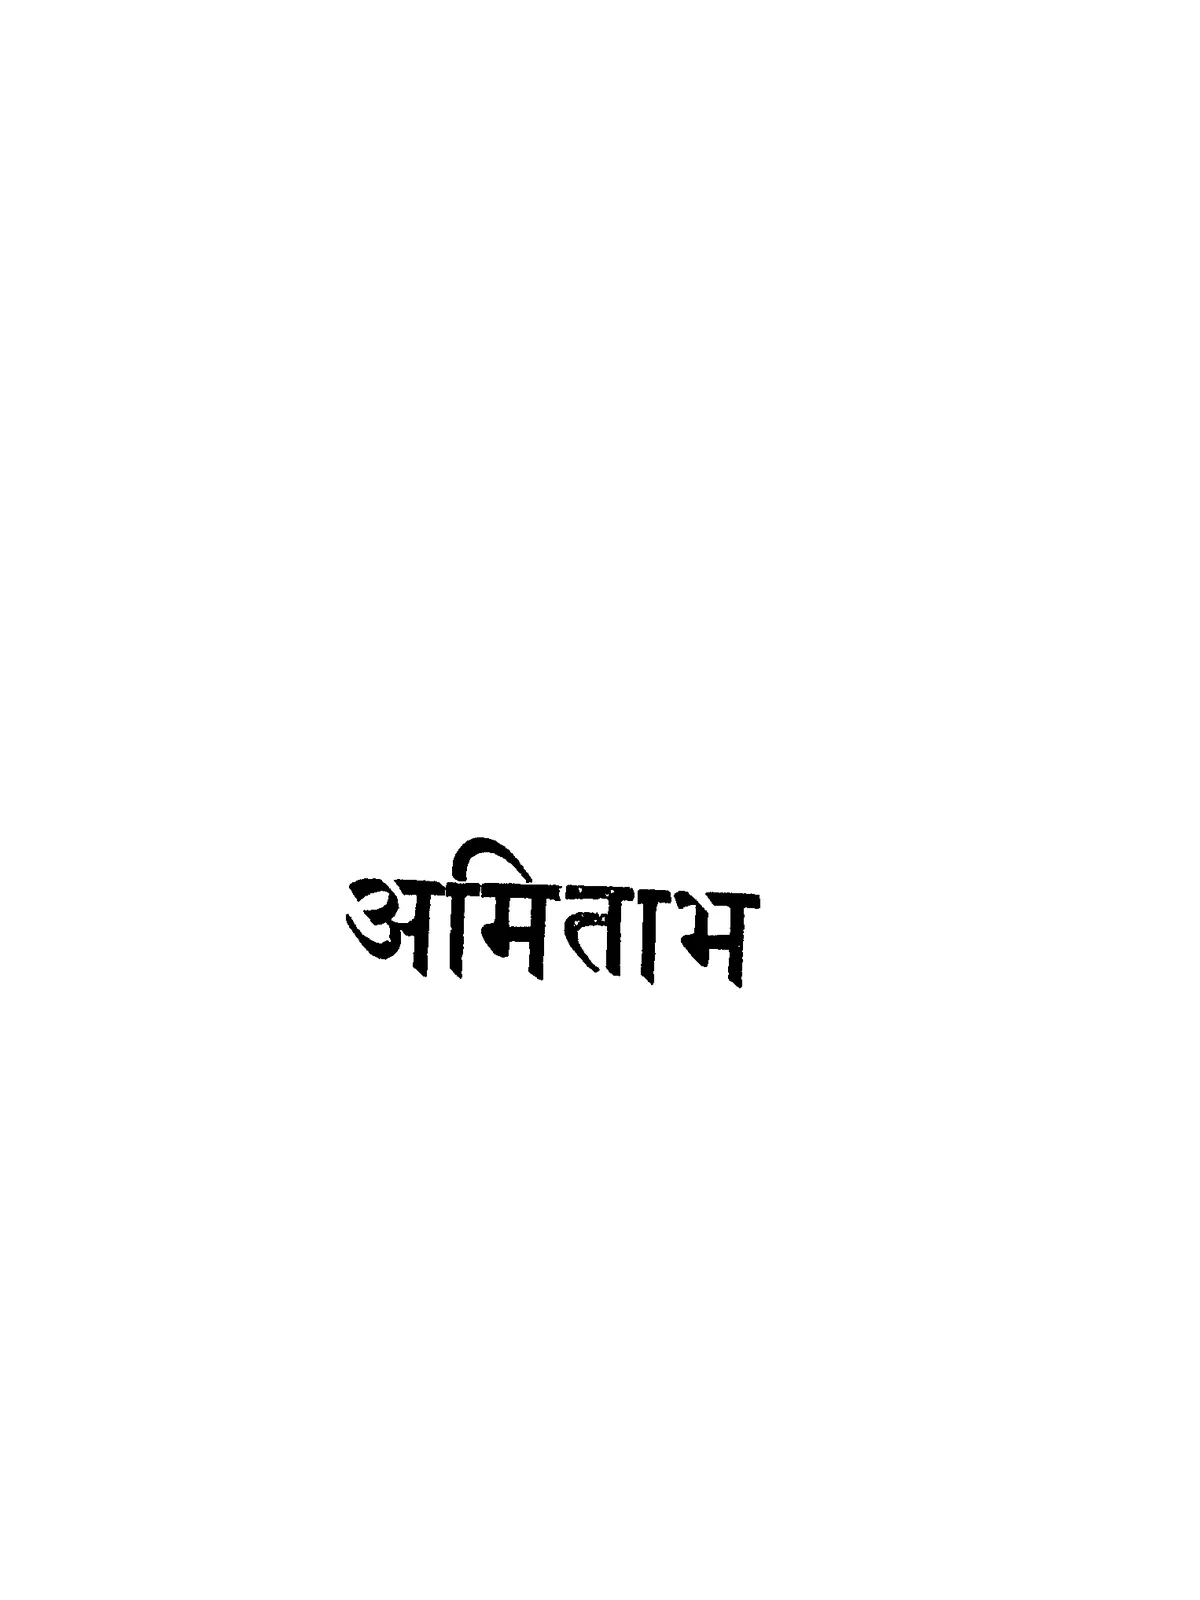 अमिताभ (Amitabh) Book